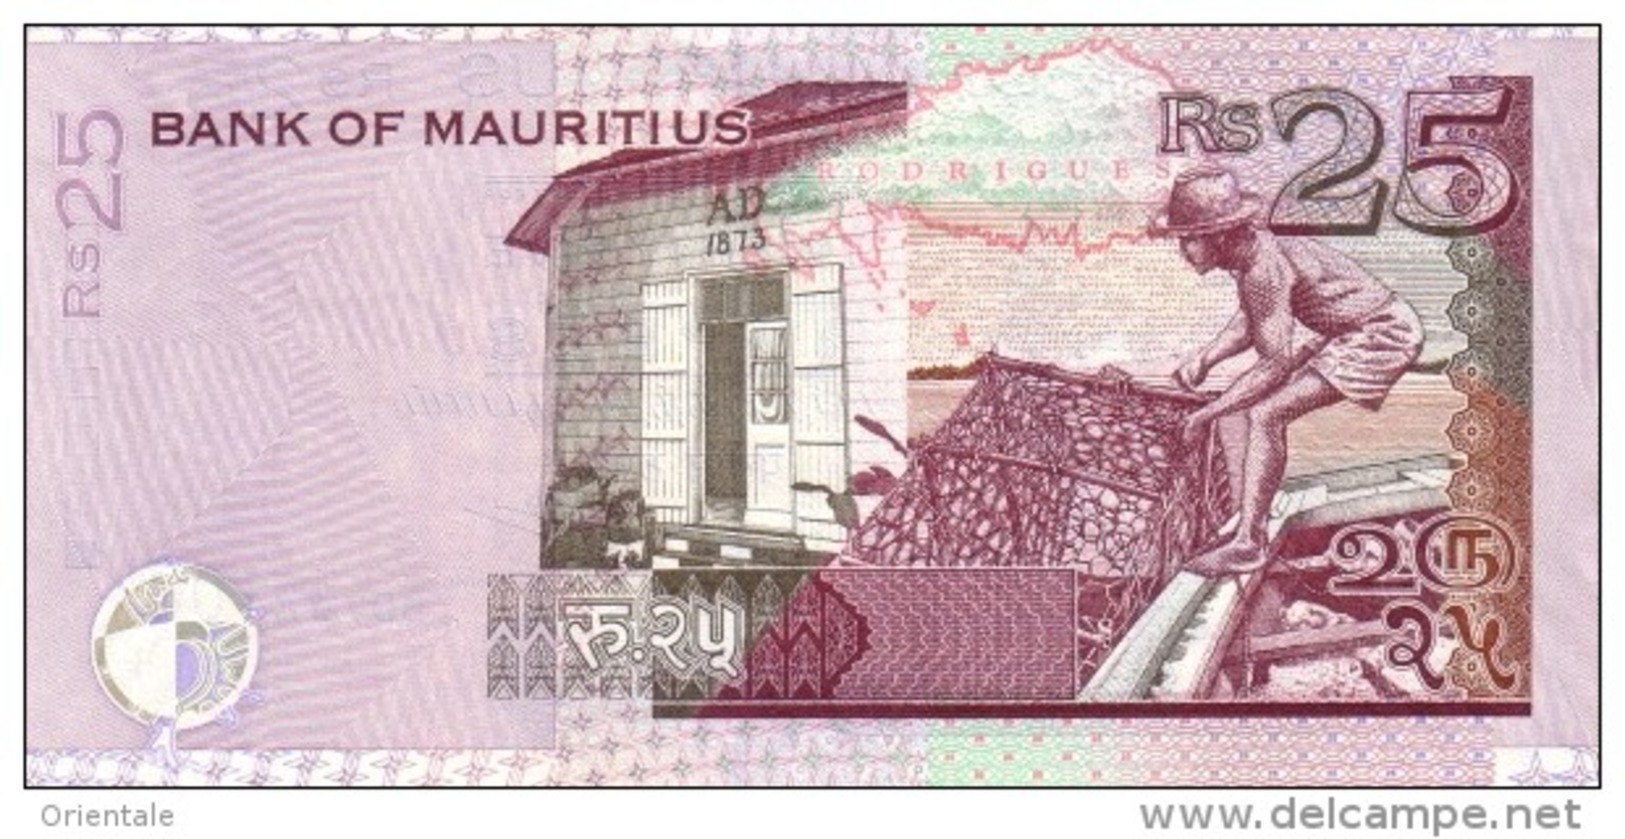 MAURITIUS P. 49d 25 R 2009 UNC - Maurice